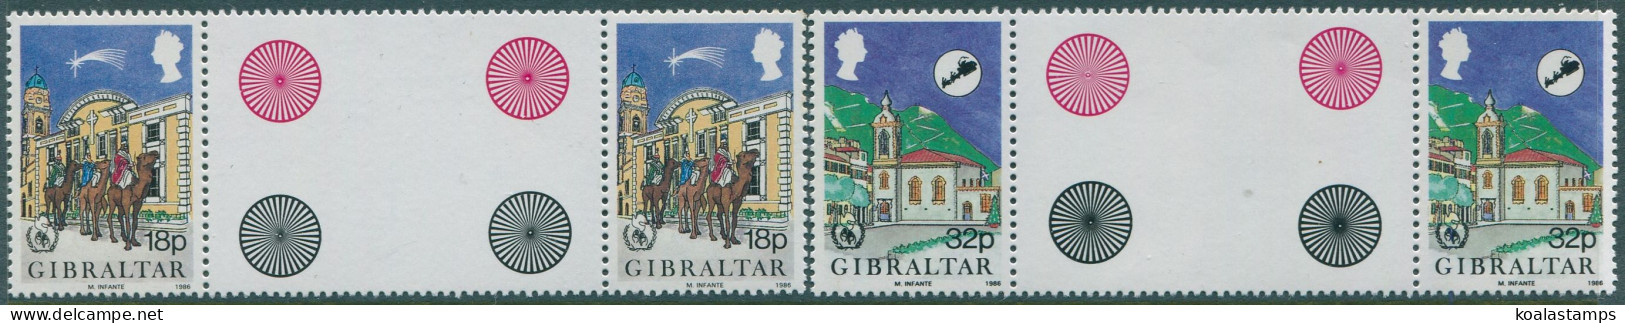 Gibraltar 1986 SG546-547 Christmas Gutter Pairs Set MNH - Gibilterra